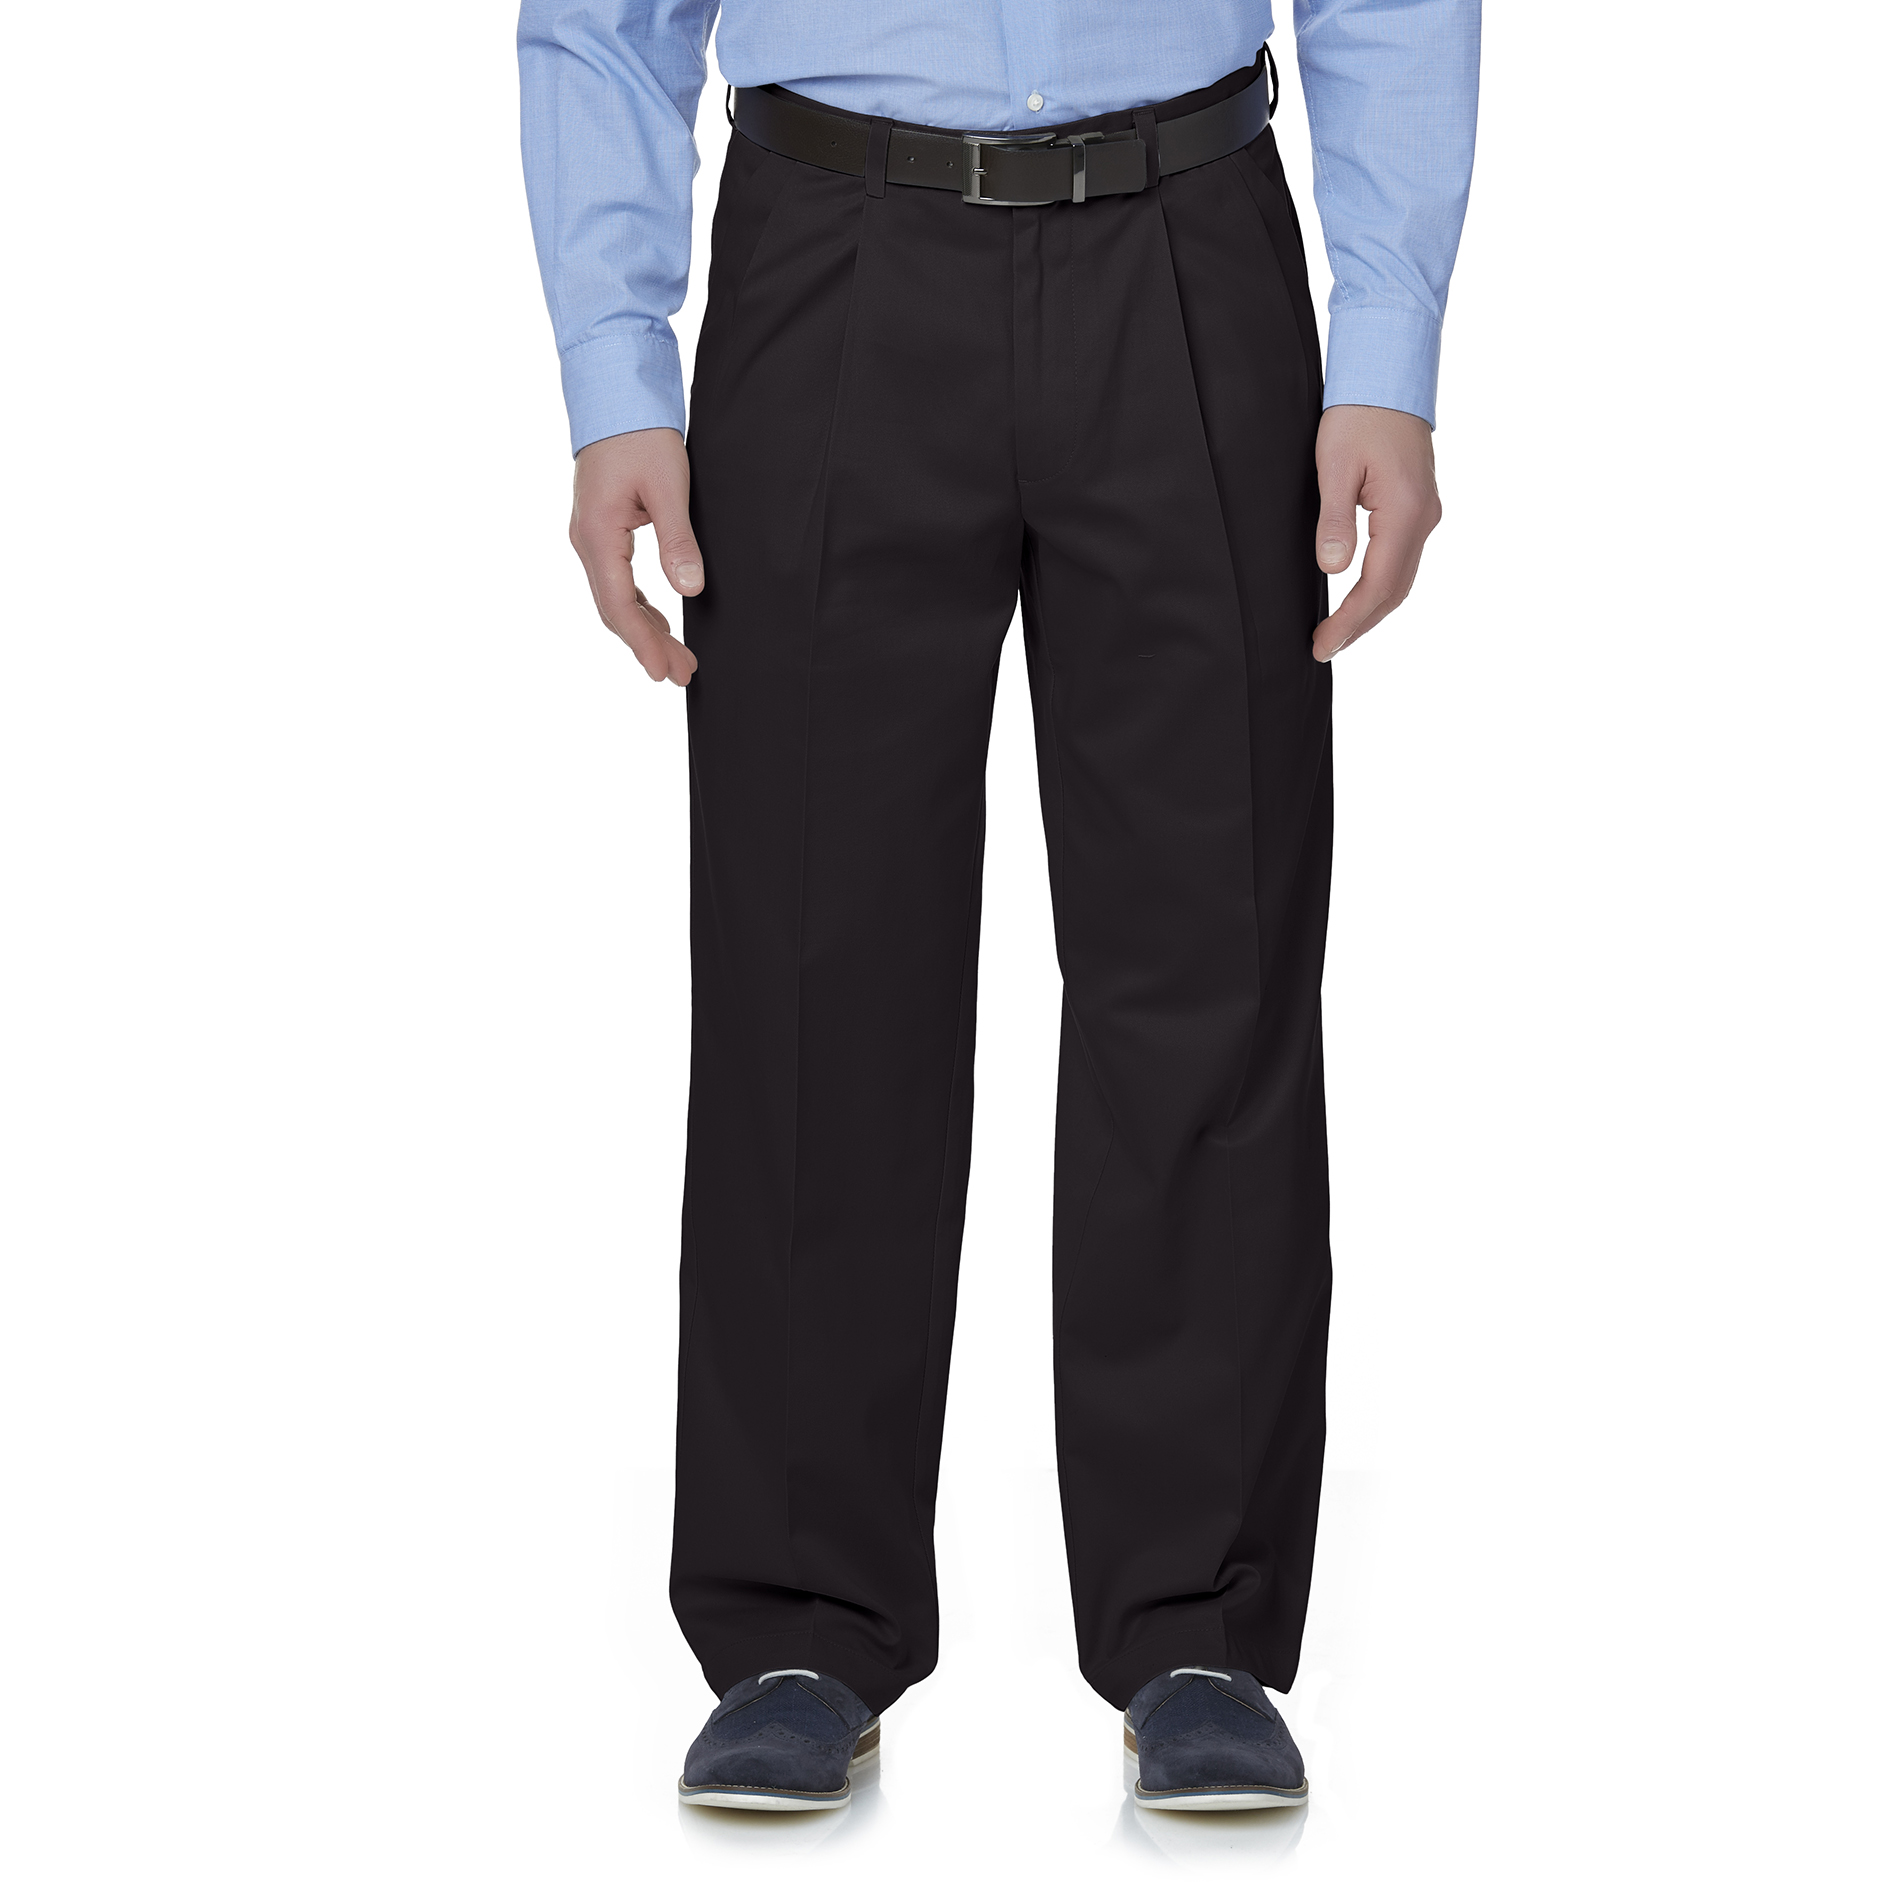 David Taylor Collection Men's Comfort Fit Pleated Dress Pants | Shop ...